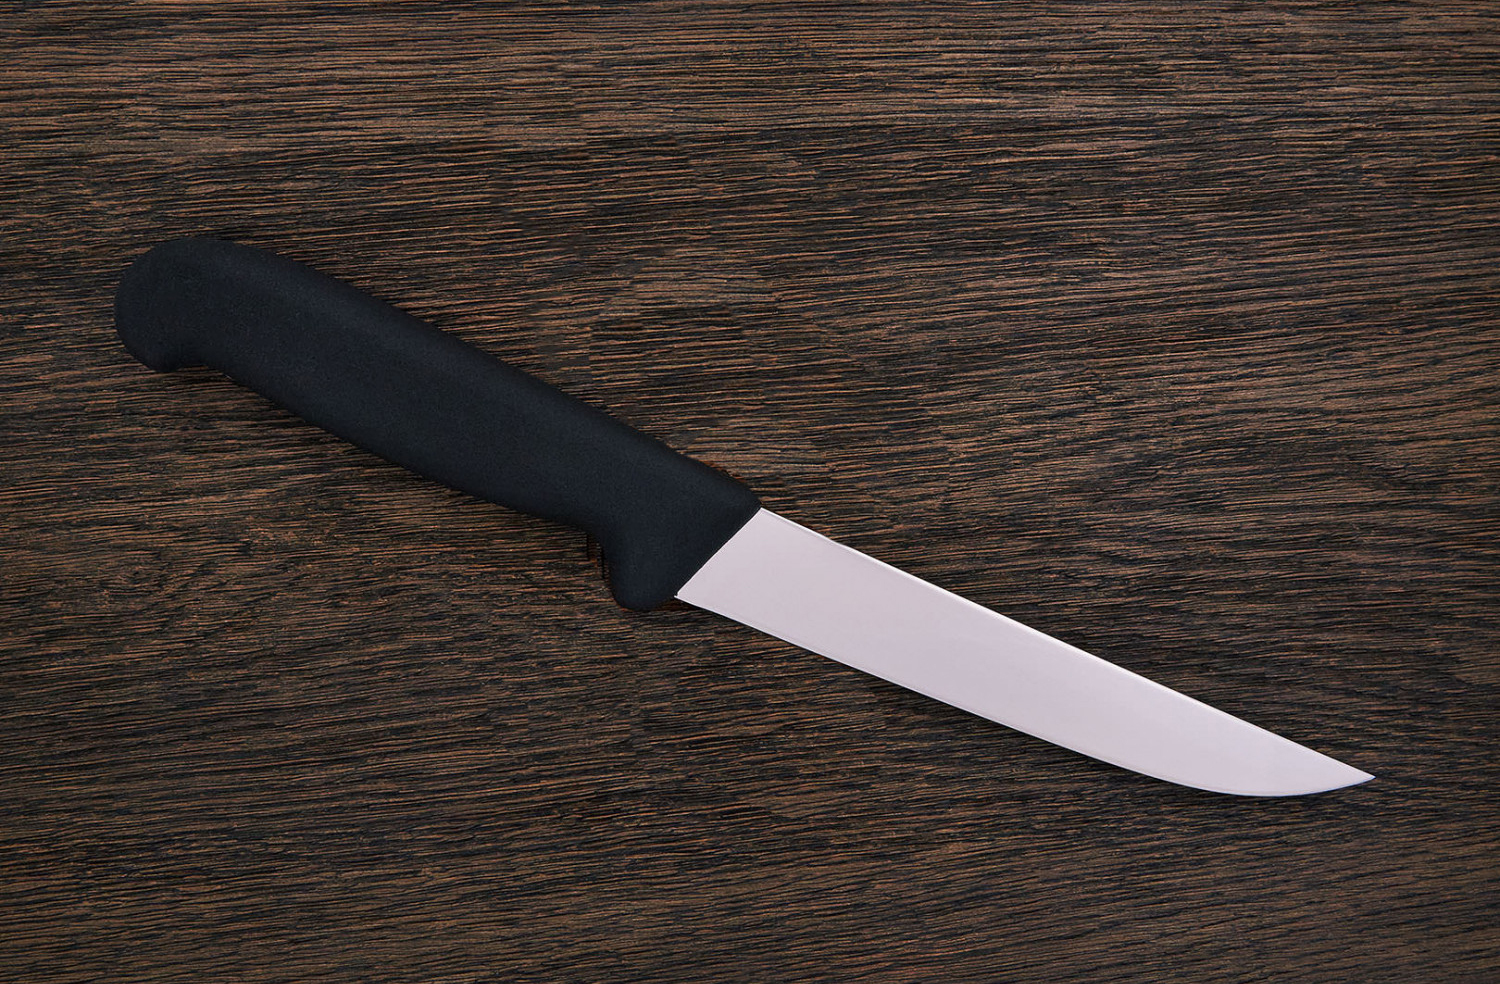 фото Кухонный нож с узким лезвием victorinox, сталь x55crmo14, рукоять термоэластопласт, черный